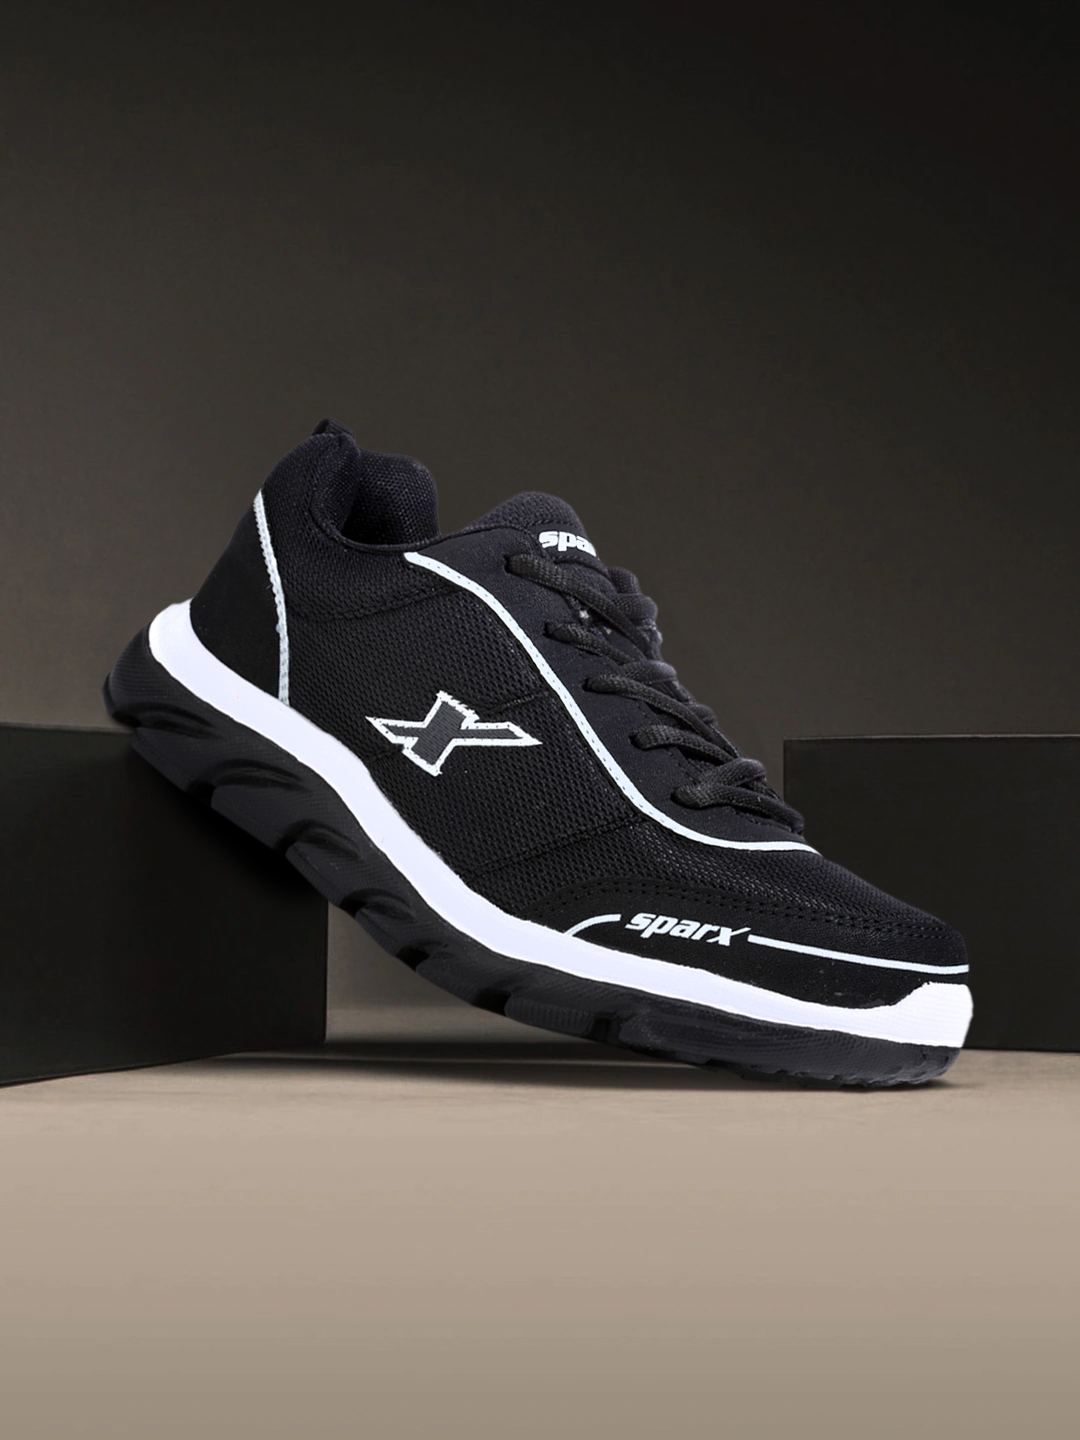 Sparx SM-163 Running Shoes For Men (Black) for Men - Buy Sparx Men's Sport  Shoes at 31% off. |Paytm Mall